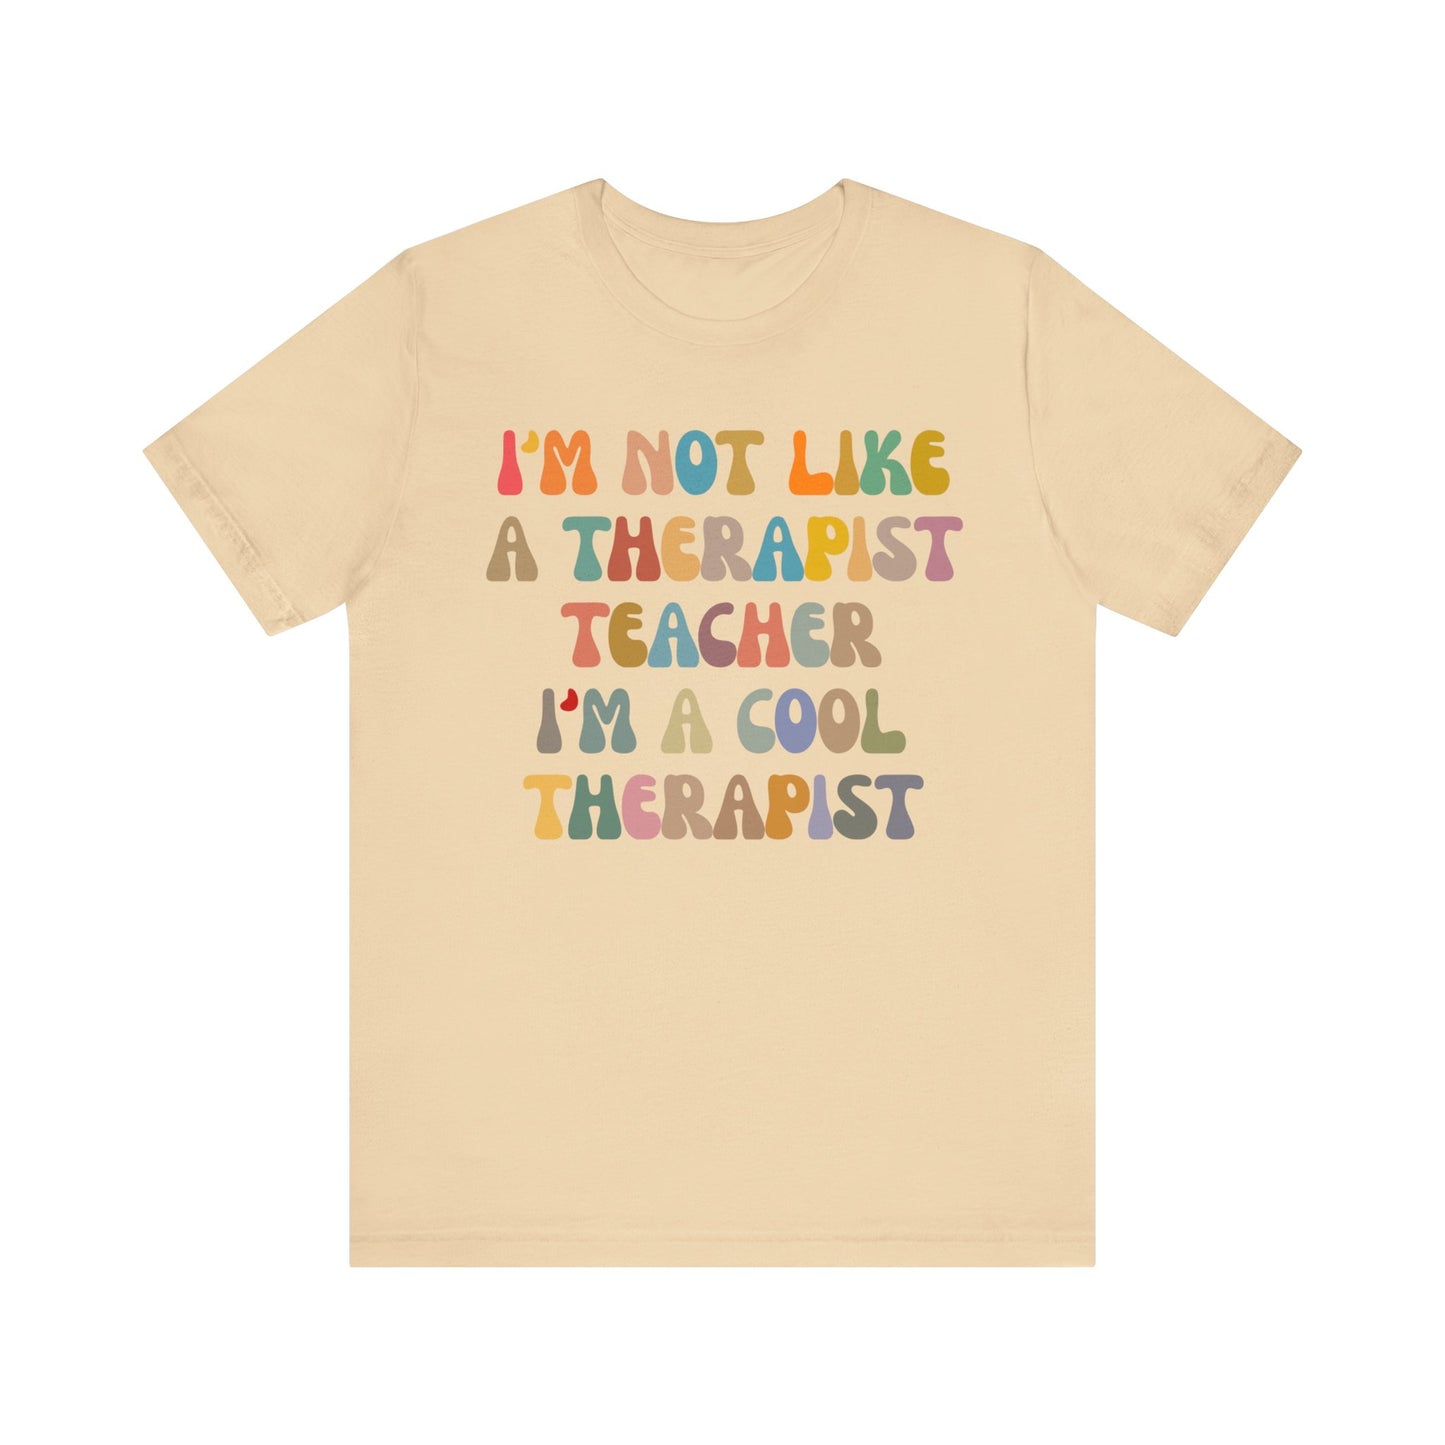 I'm Not Like A Therapist Teacher I'm A Cool Therapist Shirt, Cool Therapist Appreciation Shirt, Therapist Shirt, Shirt for Therapist, T1553